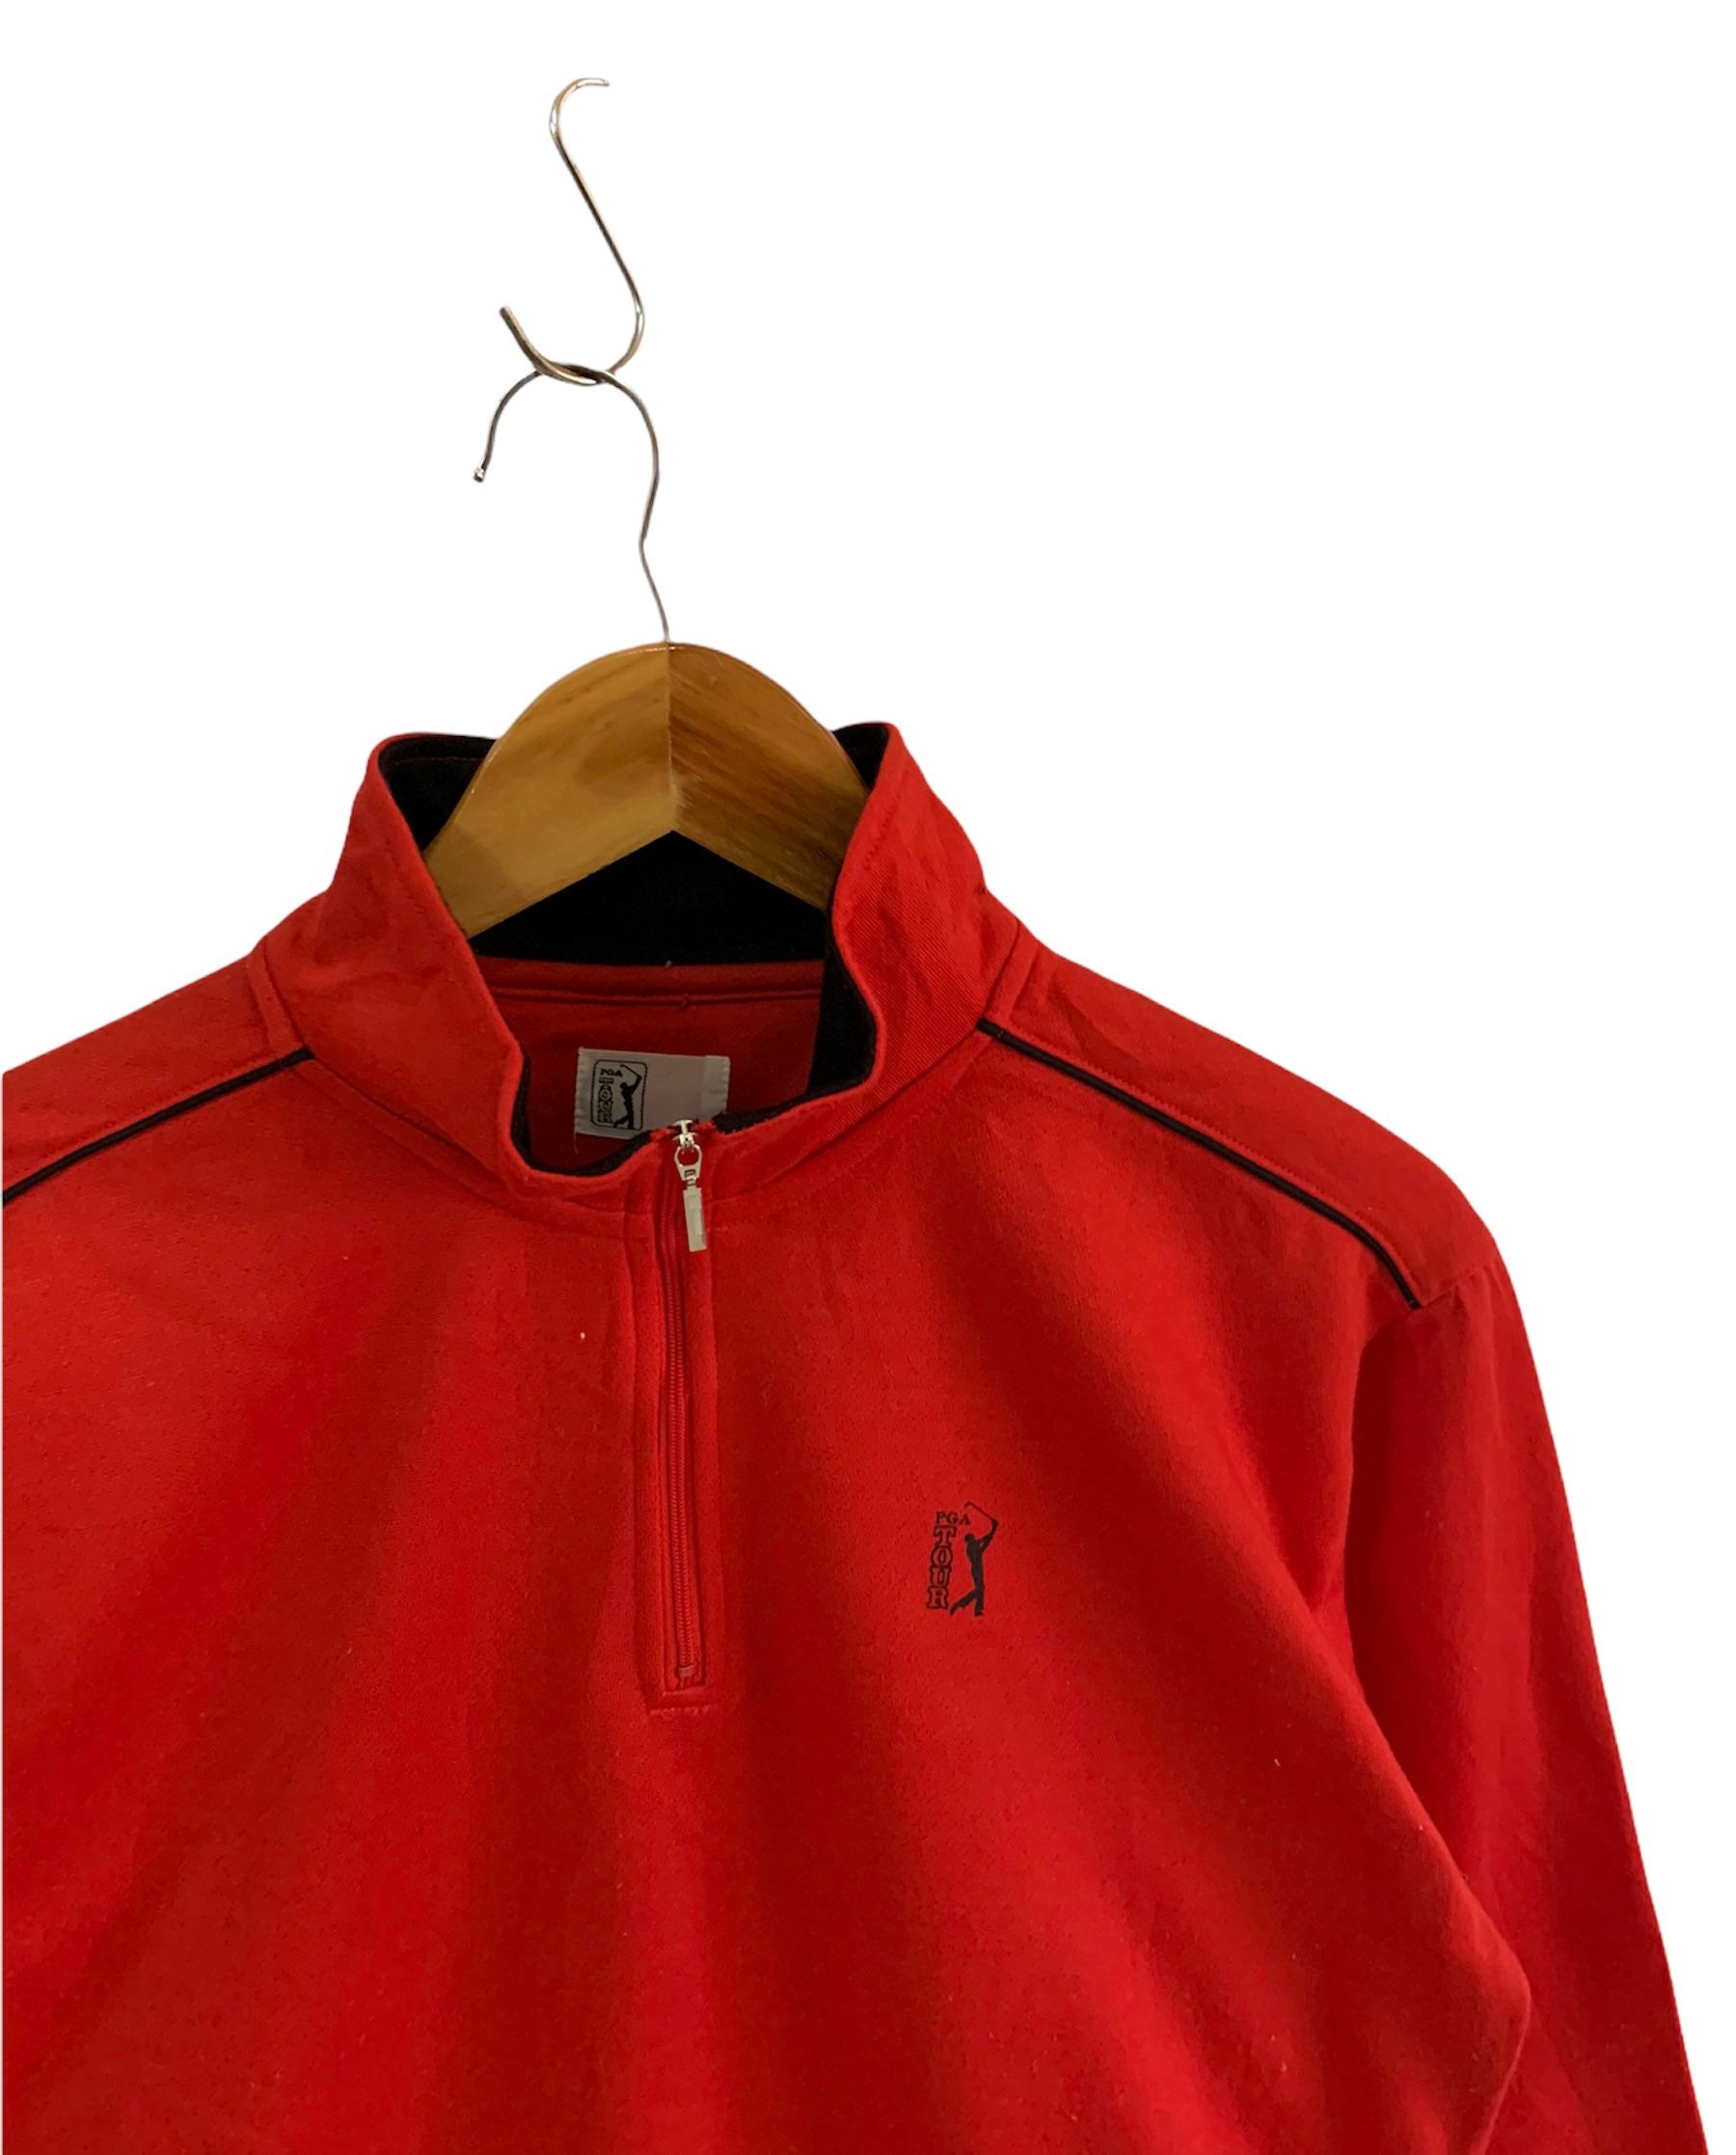 Vintage Pga Tour Golf Sweatshirt Half Zip Große Größe Pga Tiger Woods Mode Sport Pullover von FongfongStudio